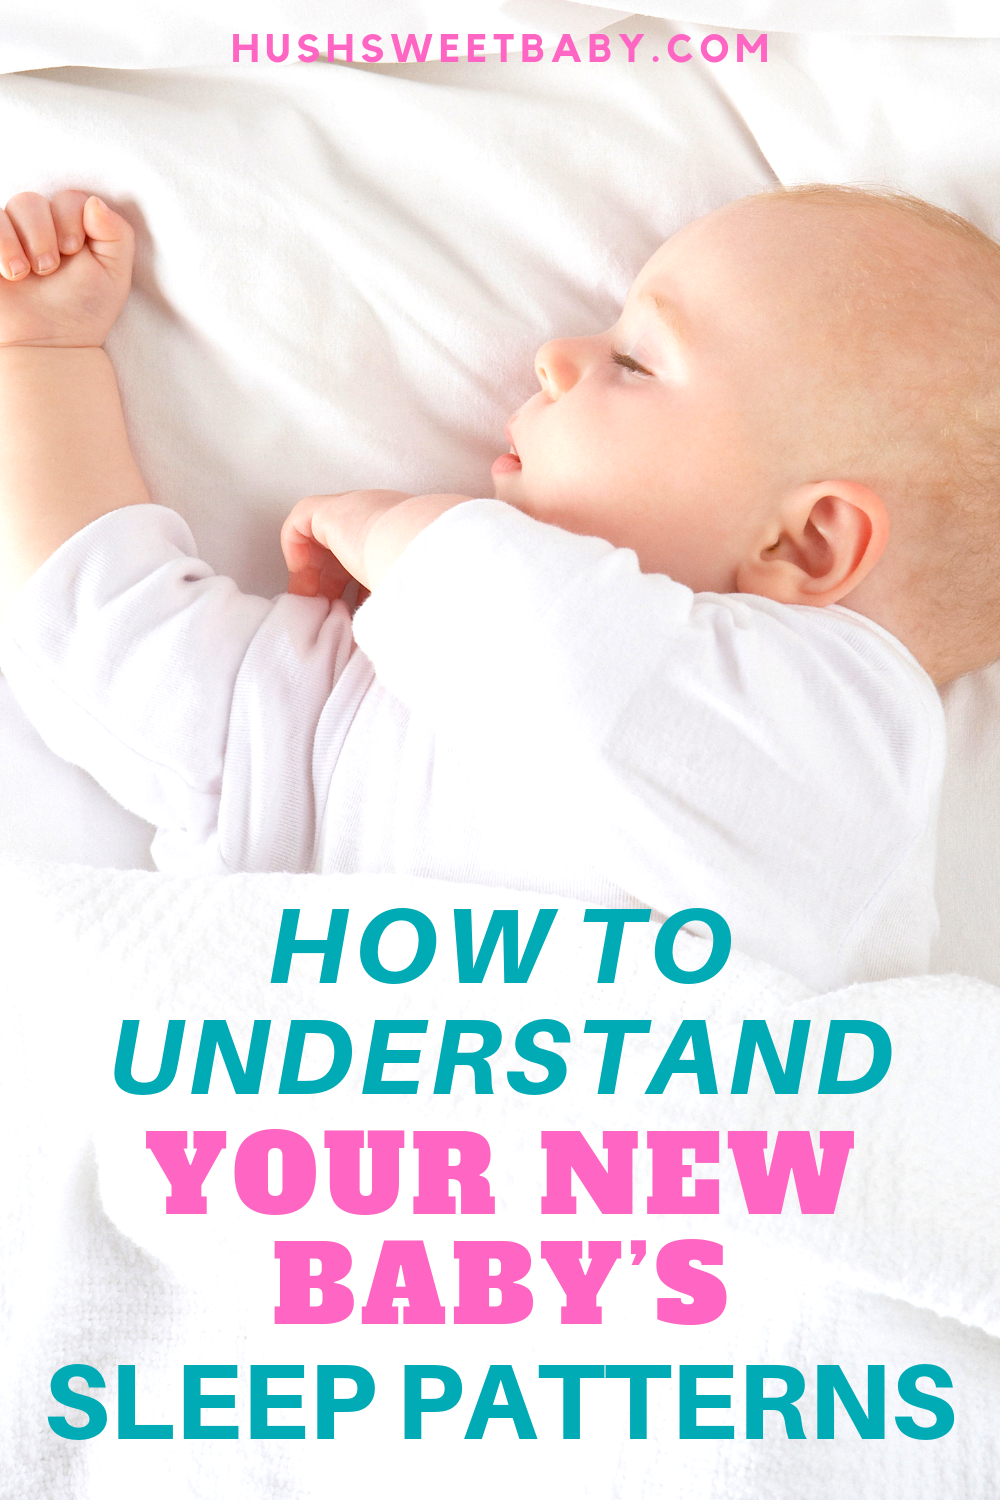 How To Understand Your New Babyâs Sleep Patterns